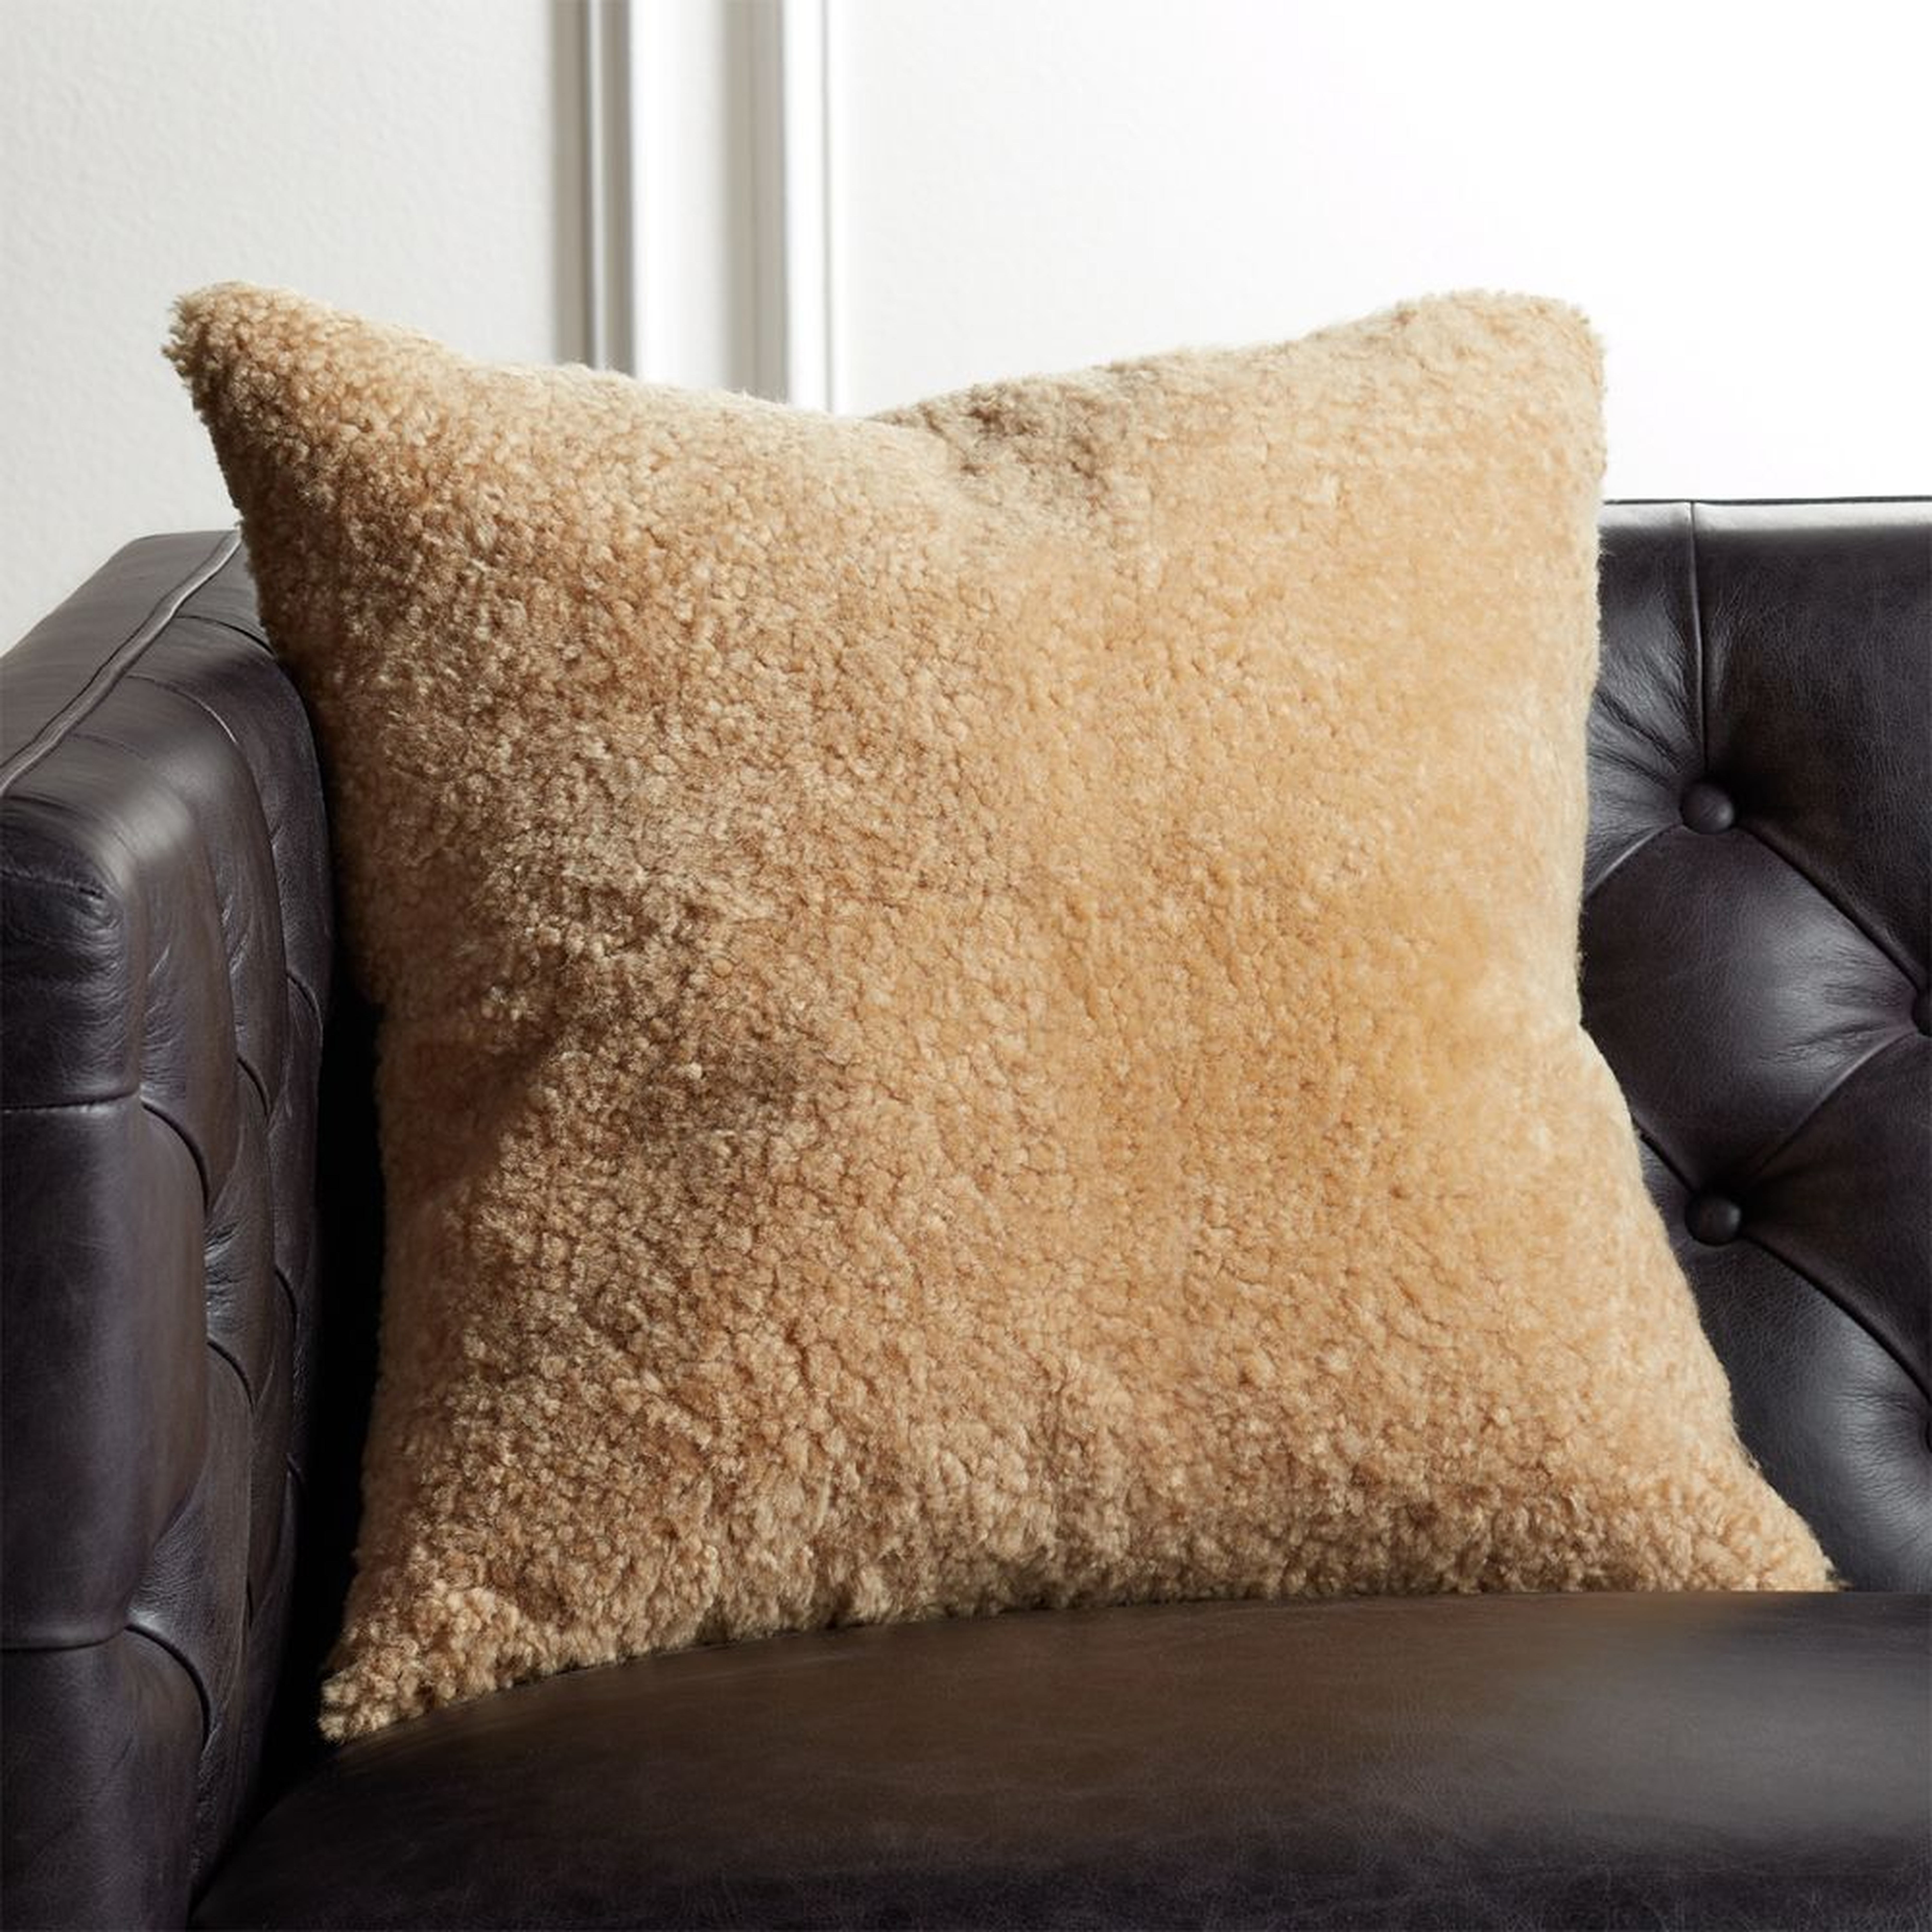 18" Shorn Sheepskin Camel Pillow with Feather-Down Insert - CB2